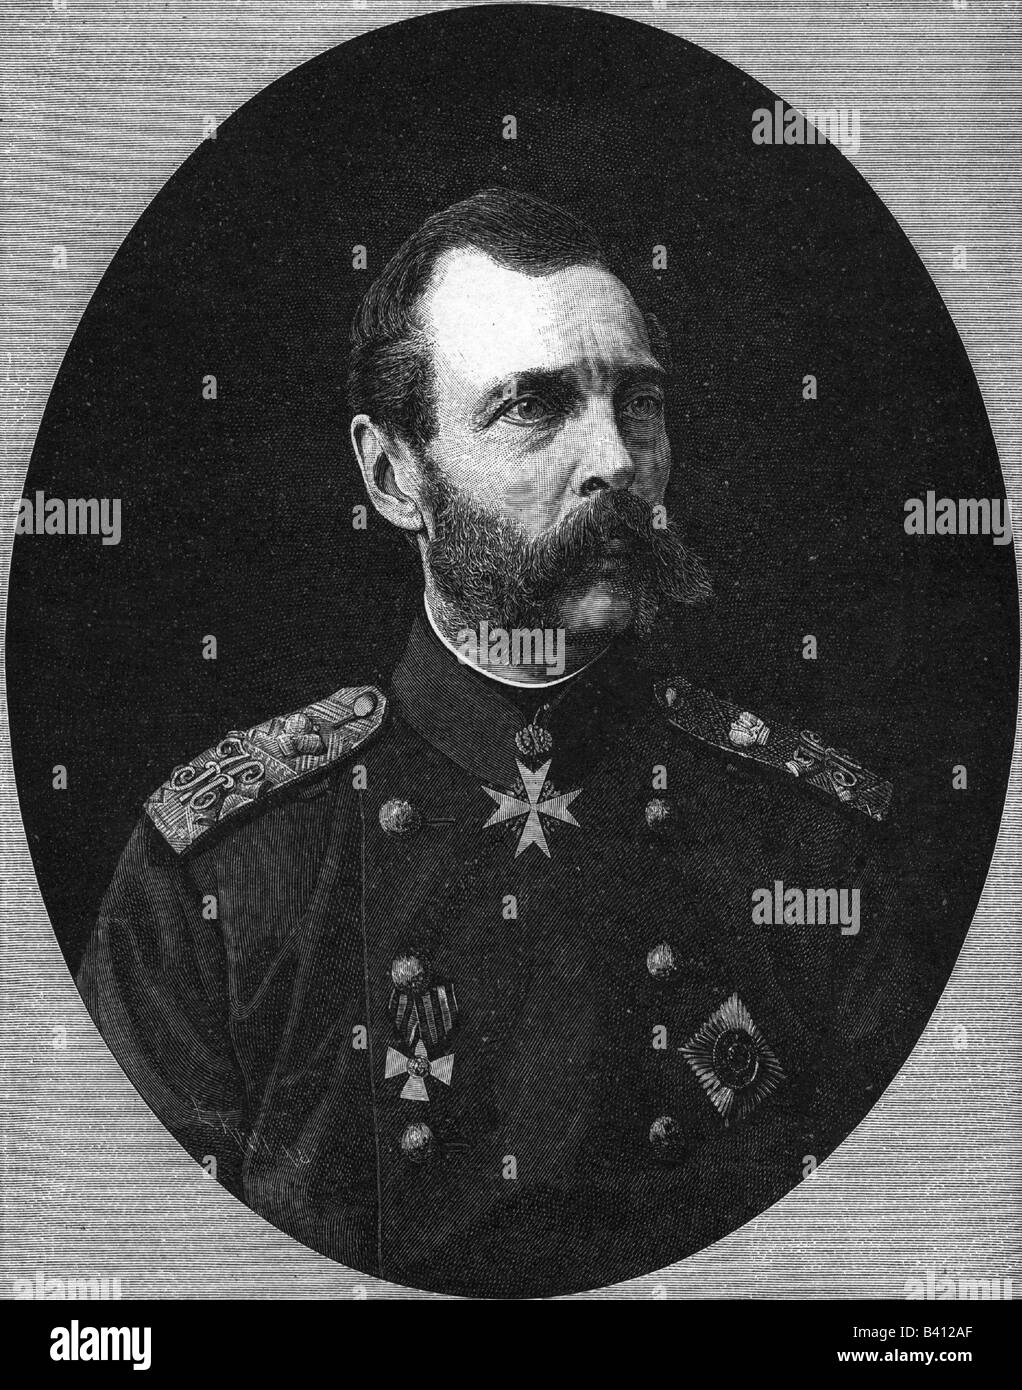 Alexander II. Nikolaevich, 29.4.186 - 13.3.1881, Kaiser von Russland 18.2.1855 - 13.3.1881, Porträt, Holzgravur, 19. Jahrhundert, Stockfoto